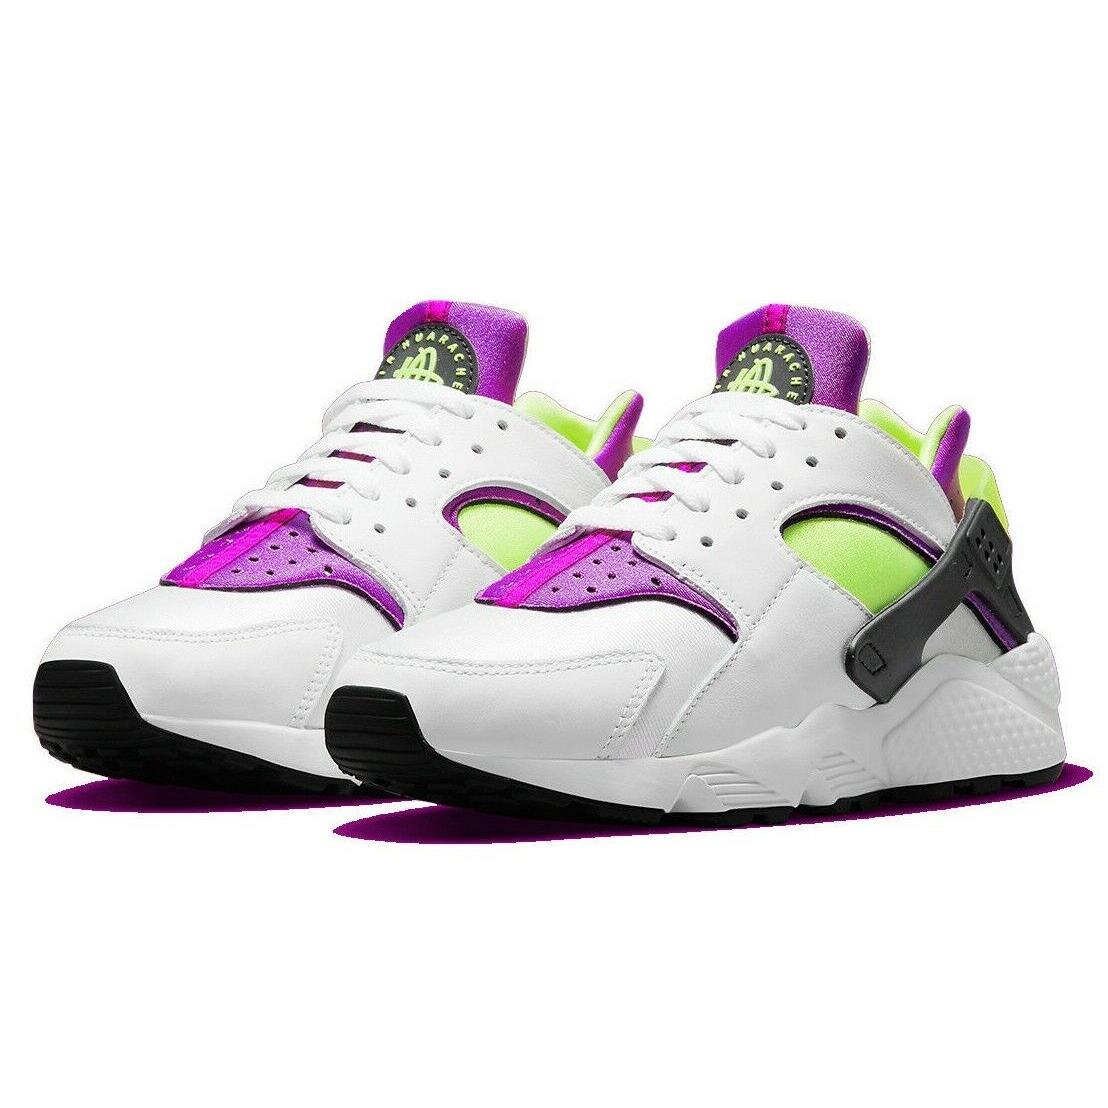 Nike Air Huarache Womens Size 7 Sneaker Shoes DH4439 101 Neon Magenta